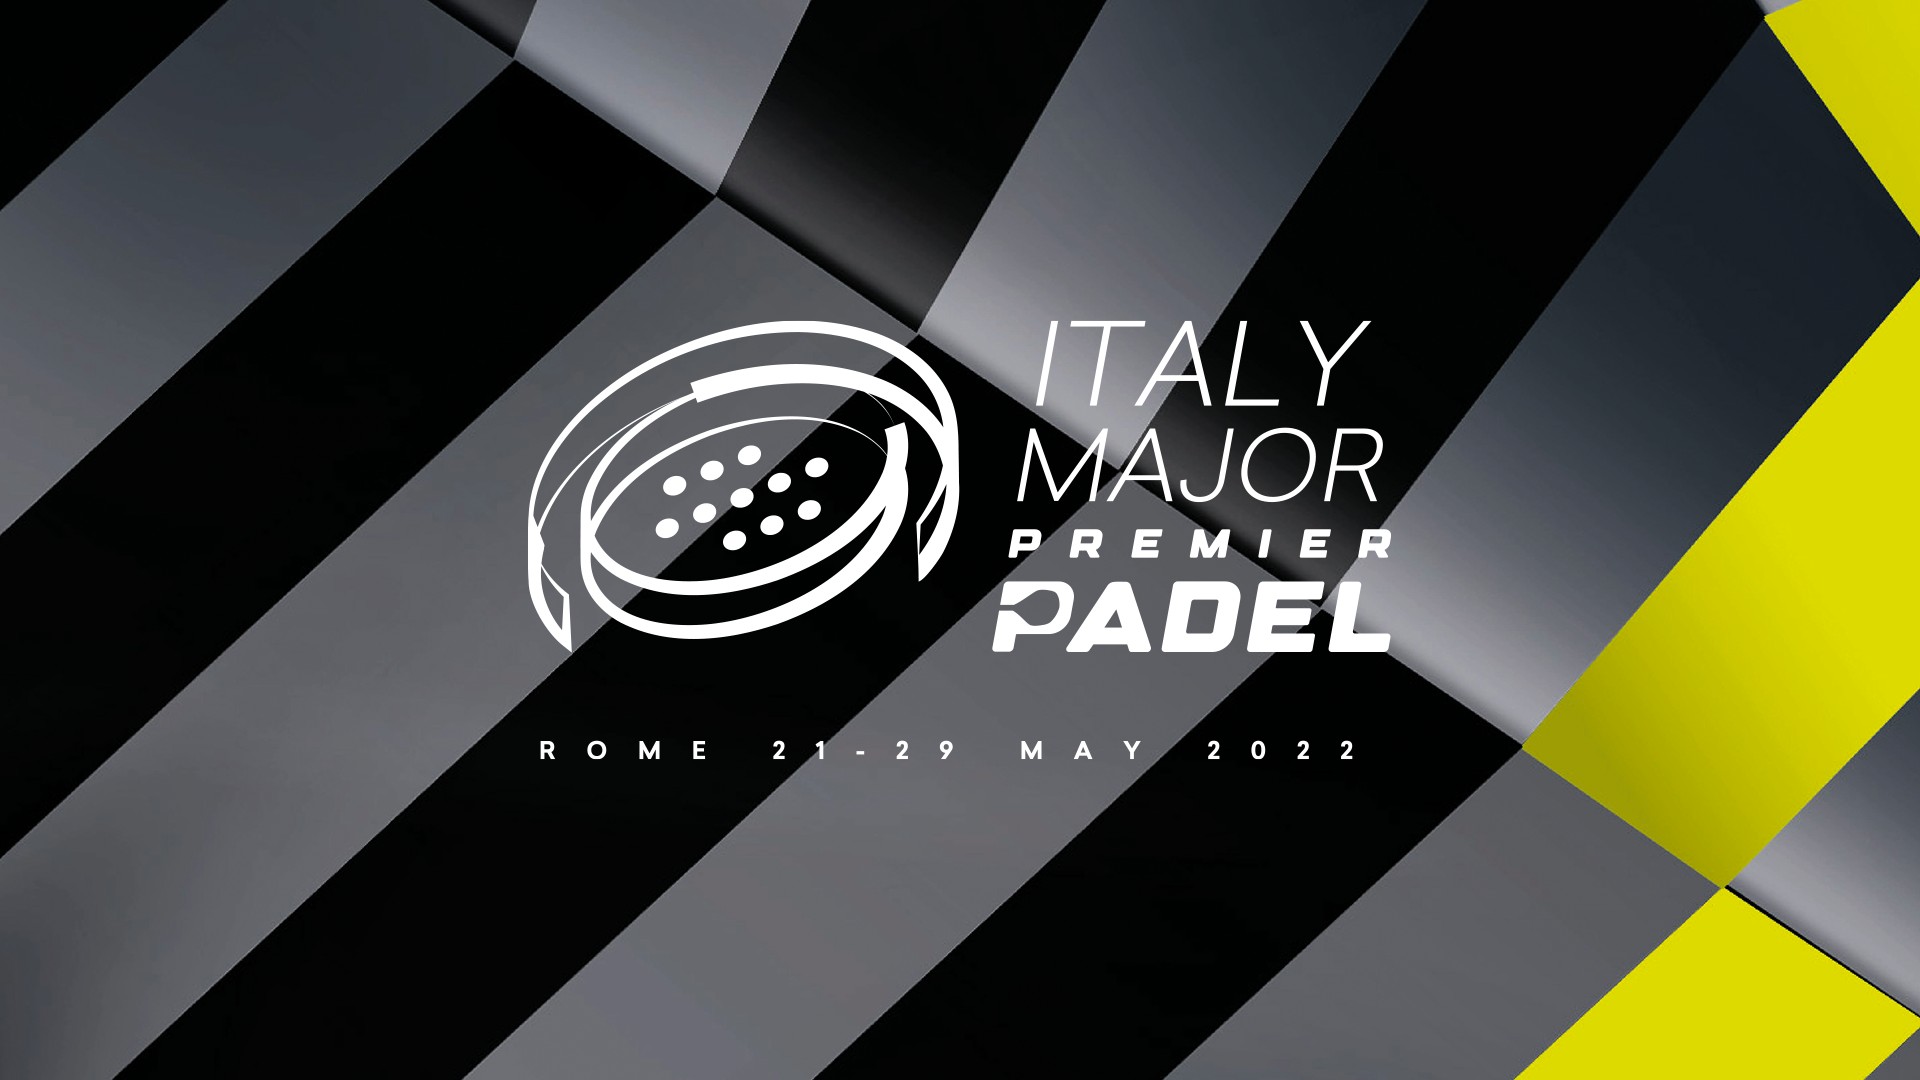 Italy Major Premier Padel rentre dans l’histoire